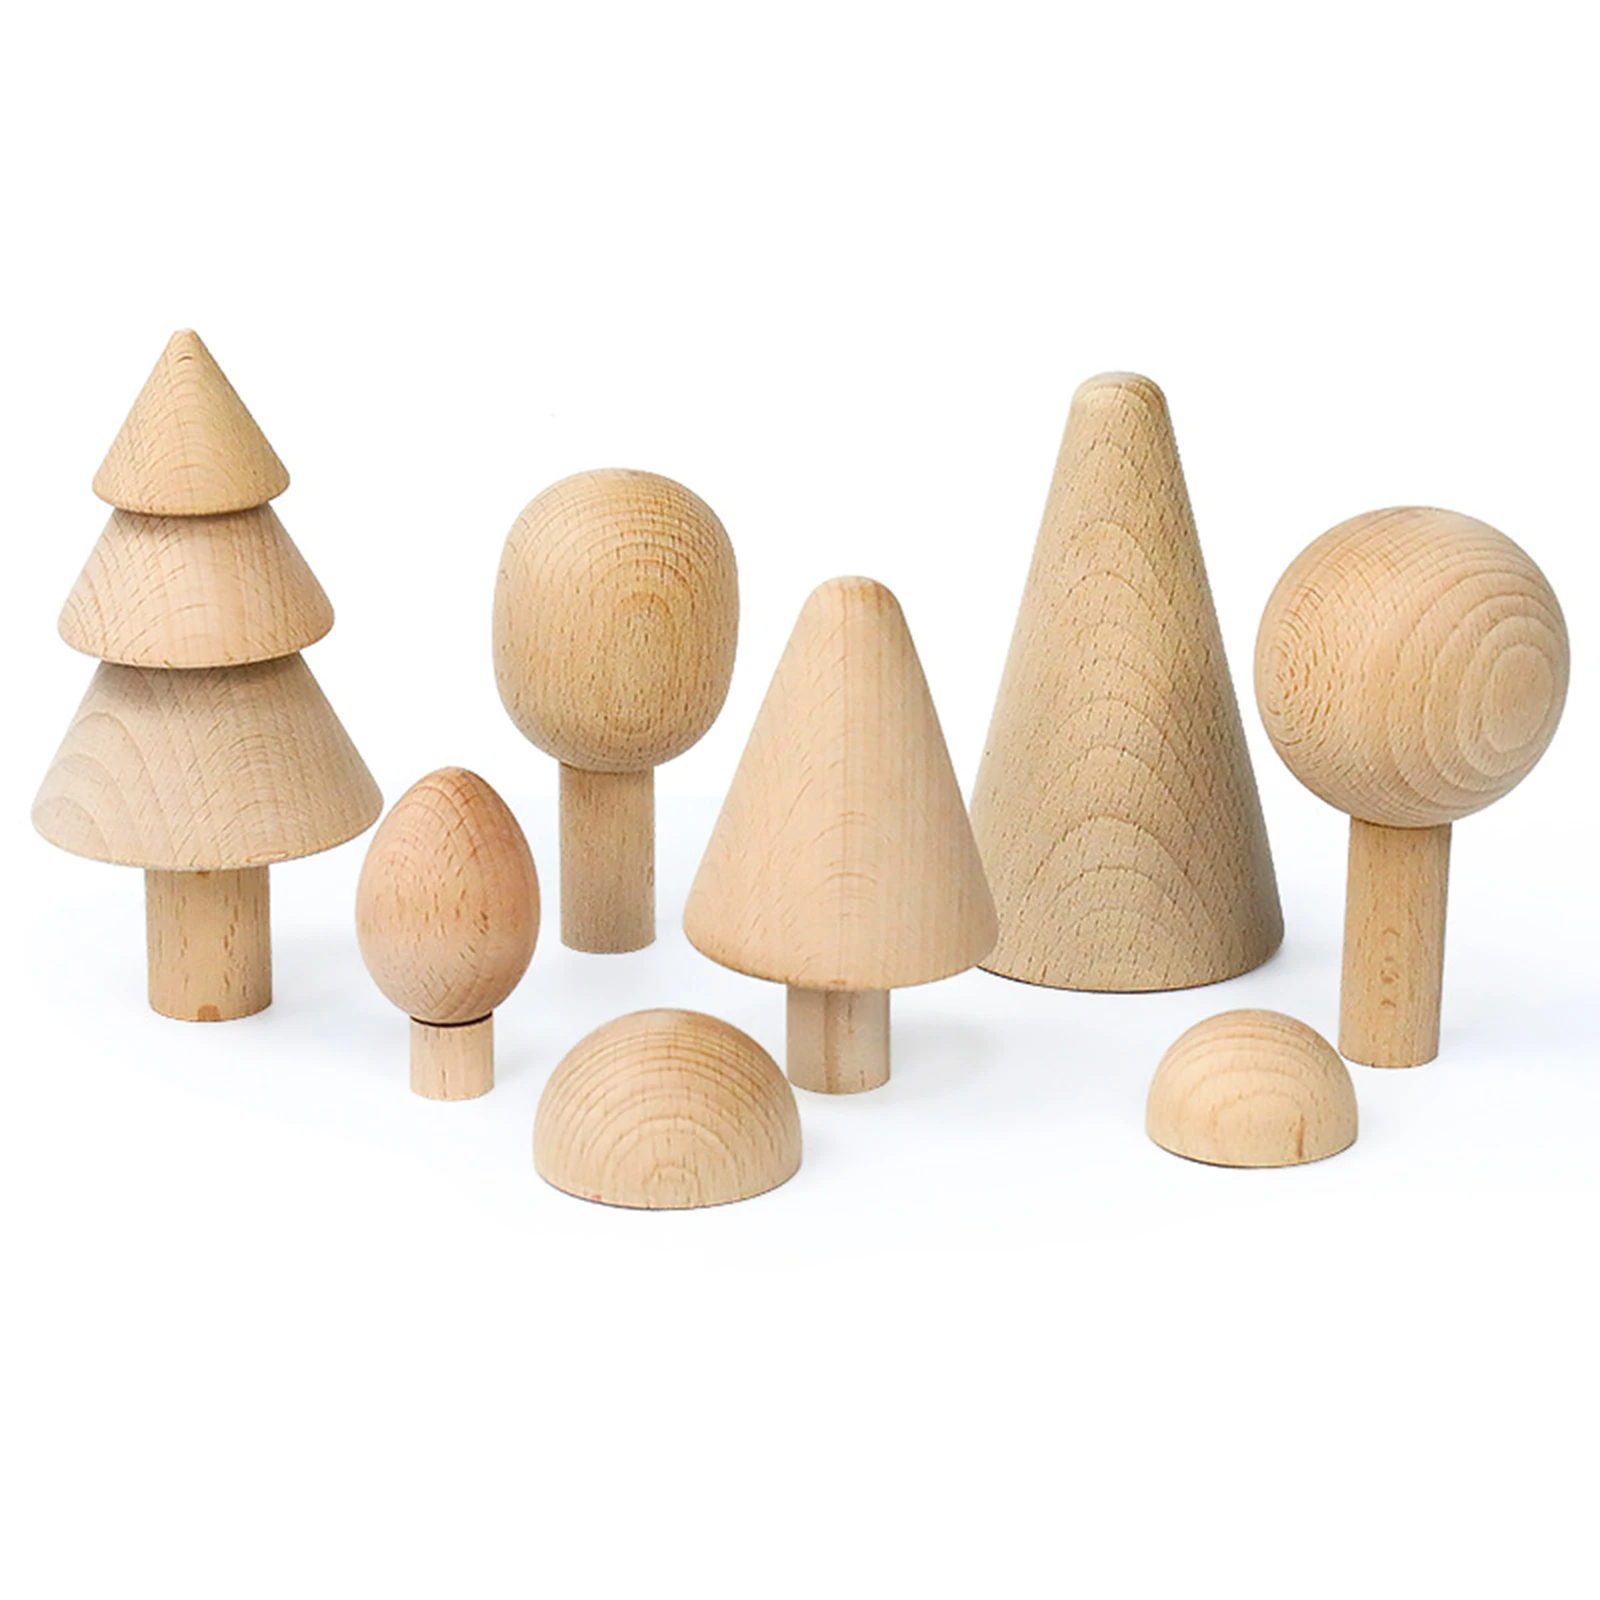 7pcs wood tree Shape Blcoks Yard Stacking Educational Preschool Learning Toys Set for 3 Year Old Children